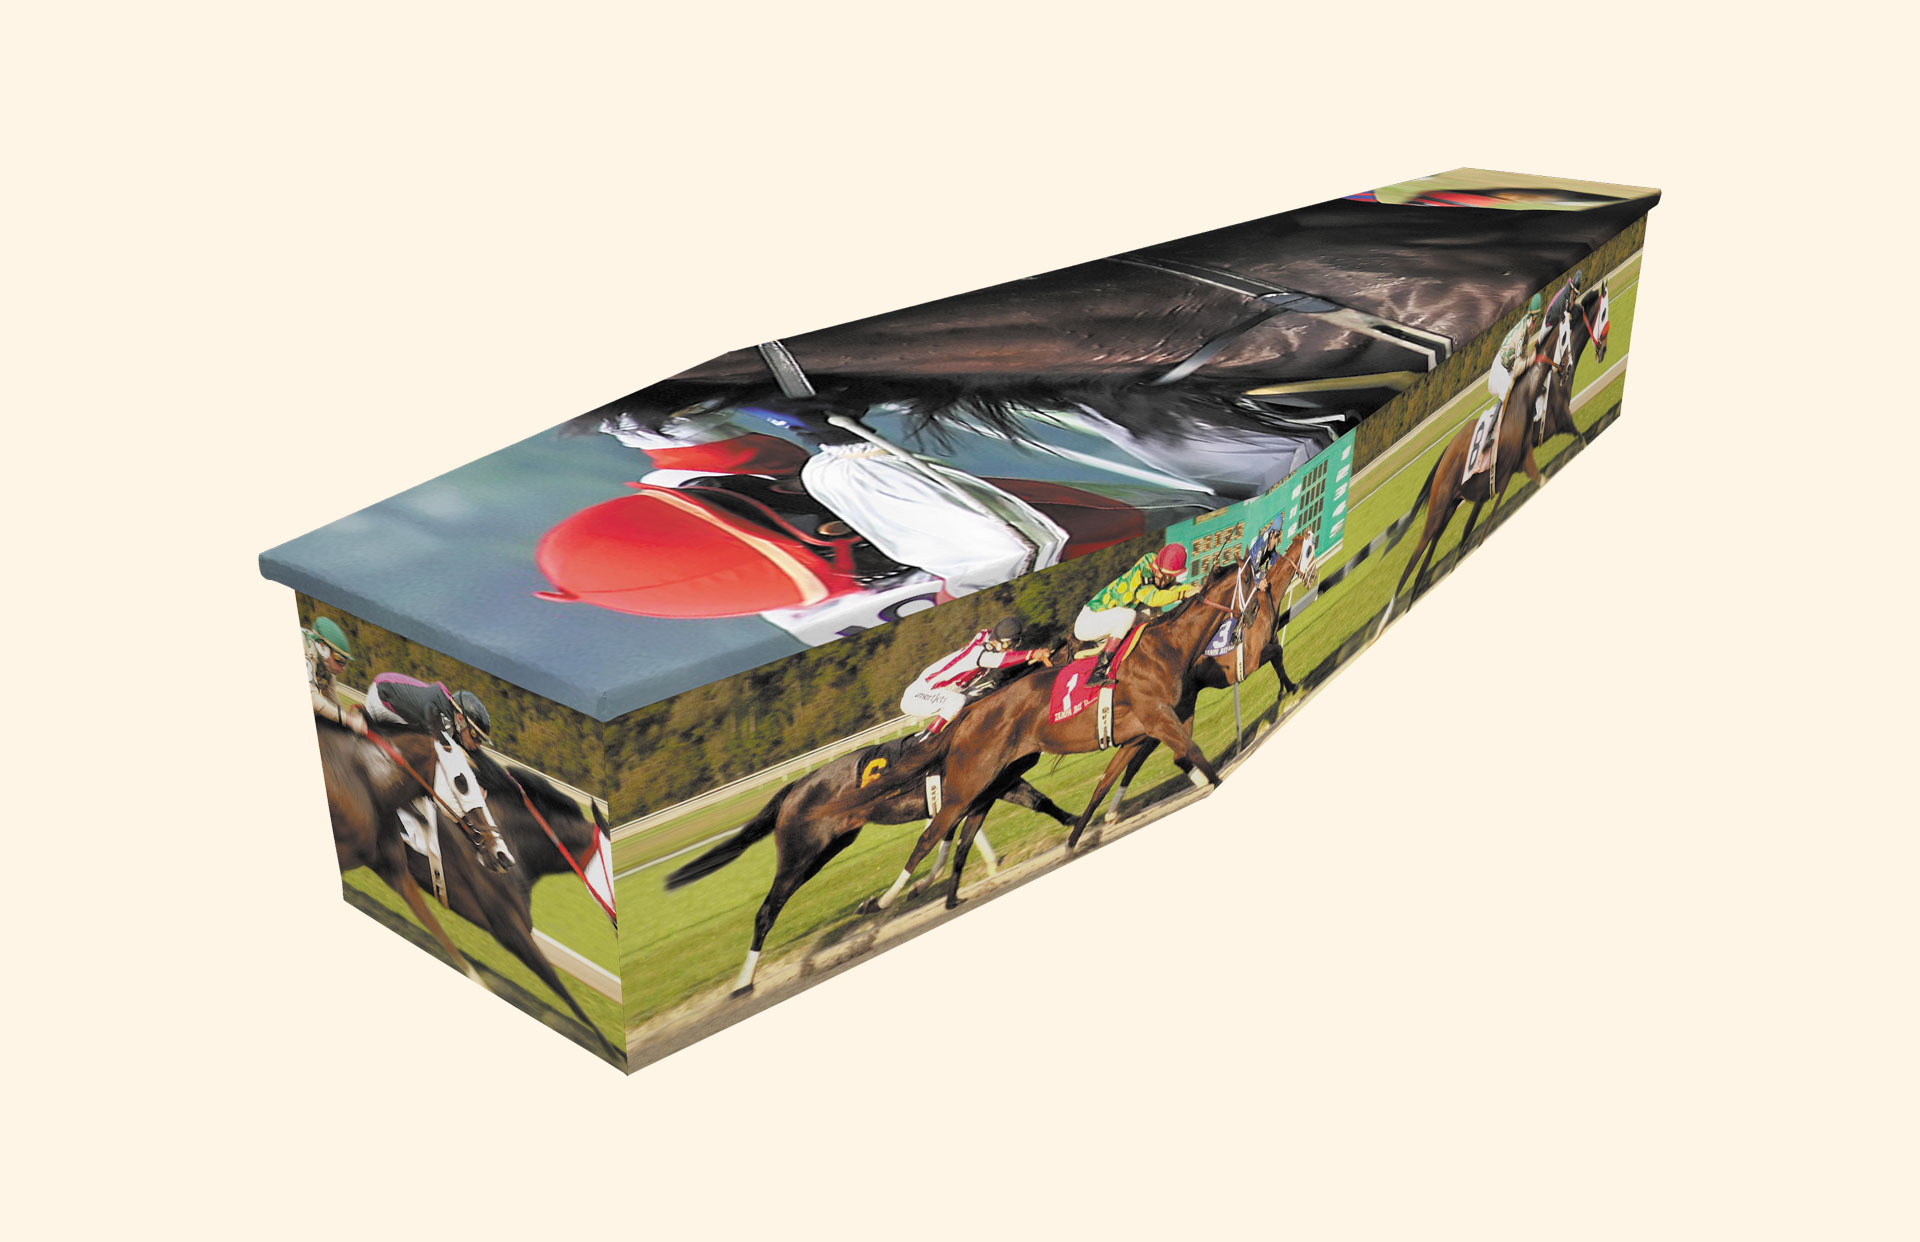 Horse Racing design on a cardboard coffin